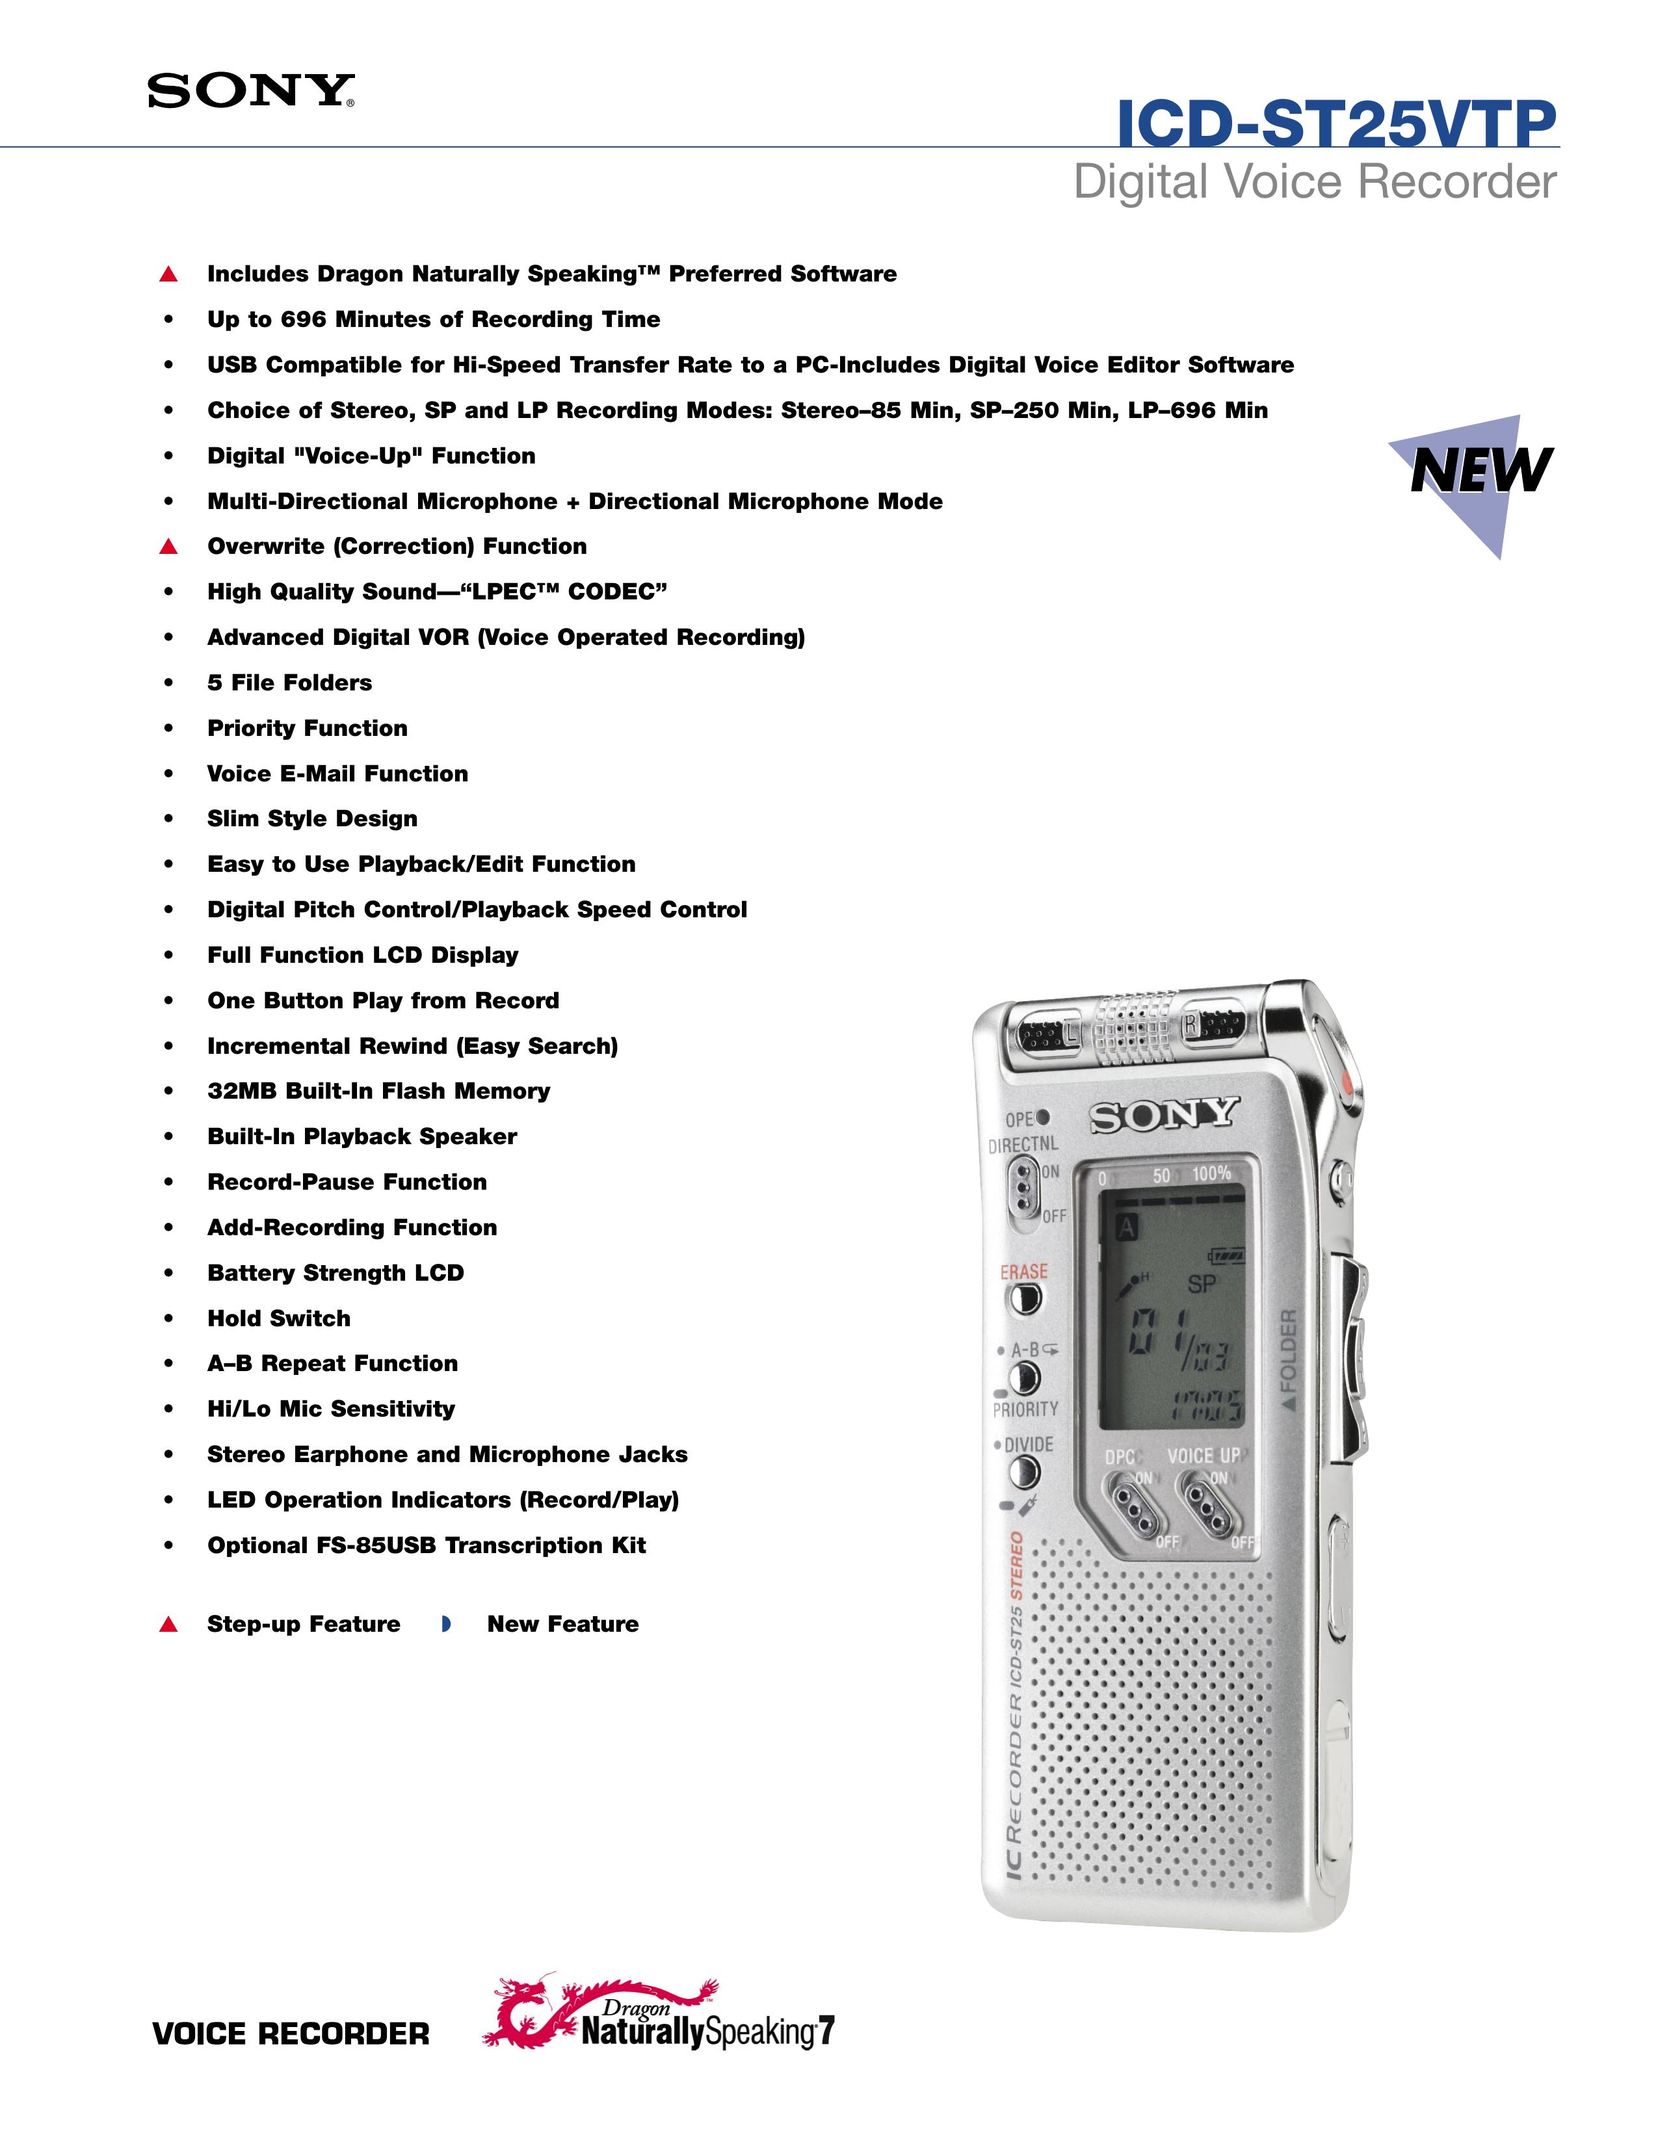 Sony ICD-ST25VTP DVR User Manual